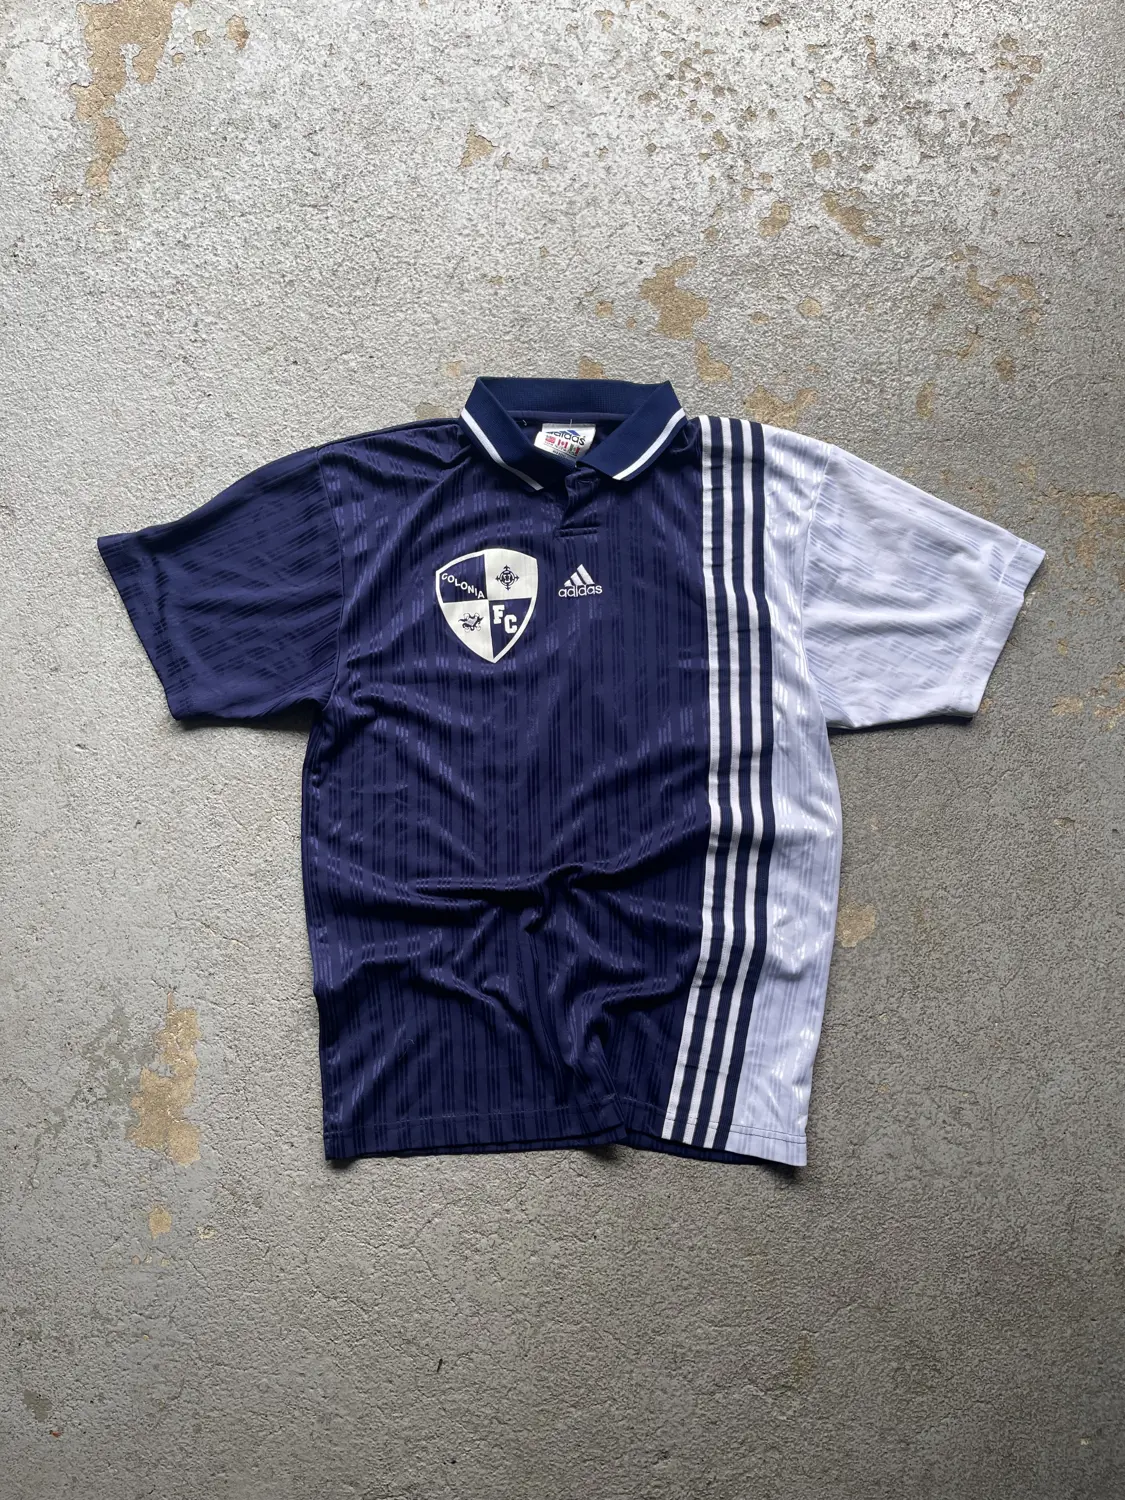 Vintage Adidas Soccer Jersey